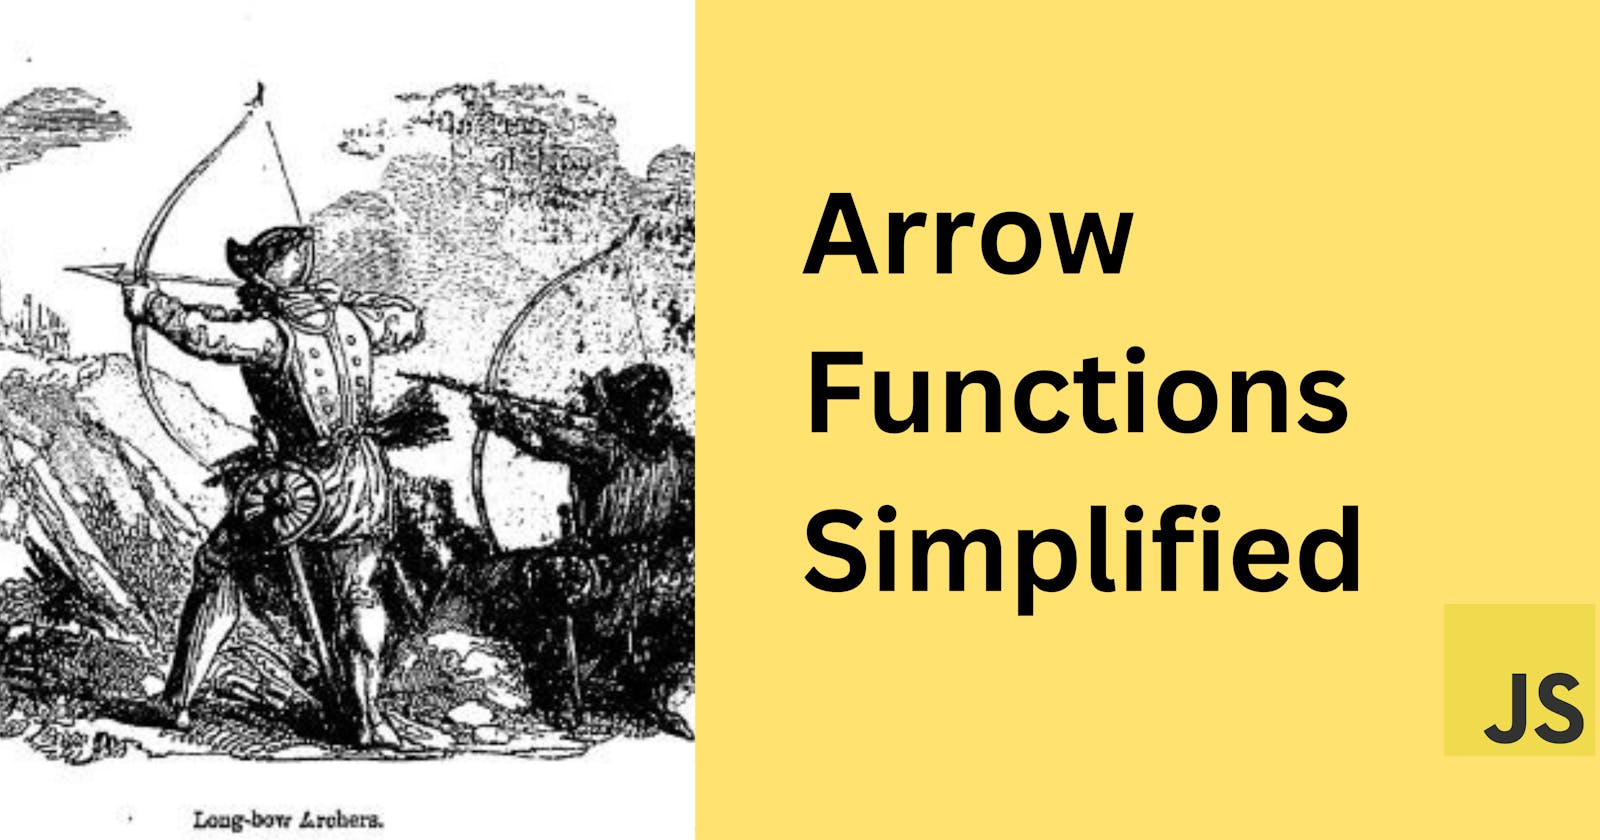 Arrow Functions Simplified